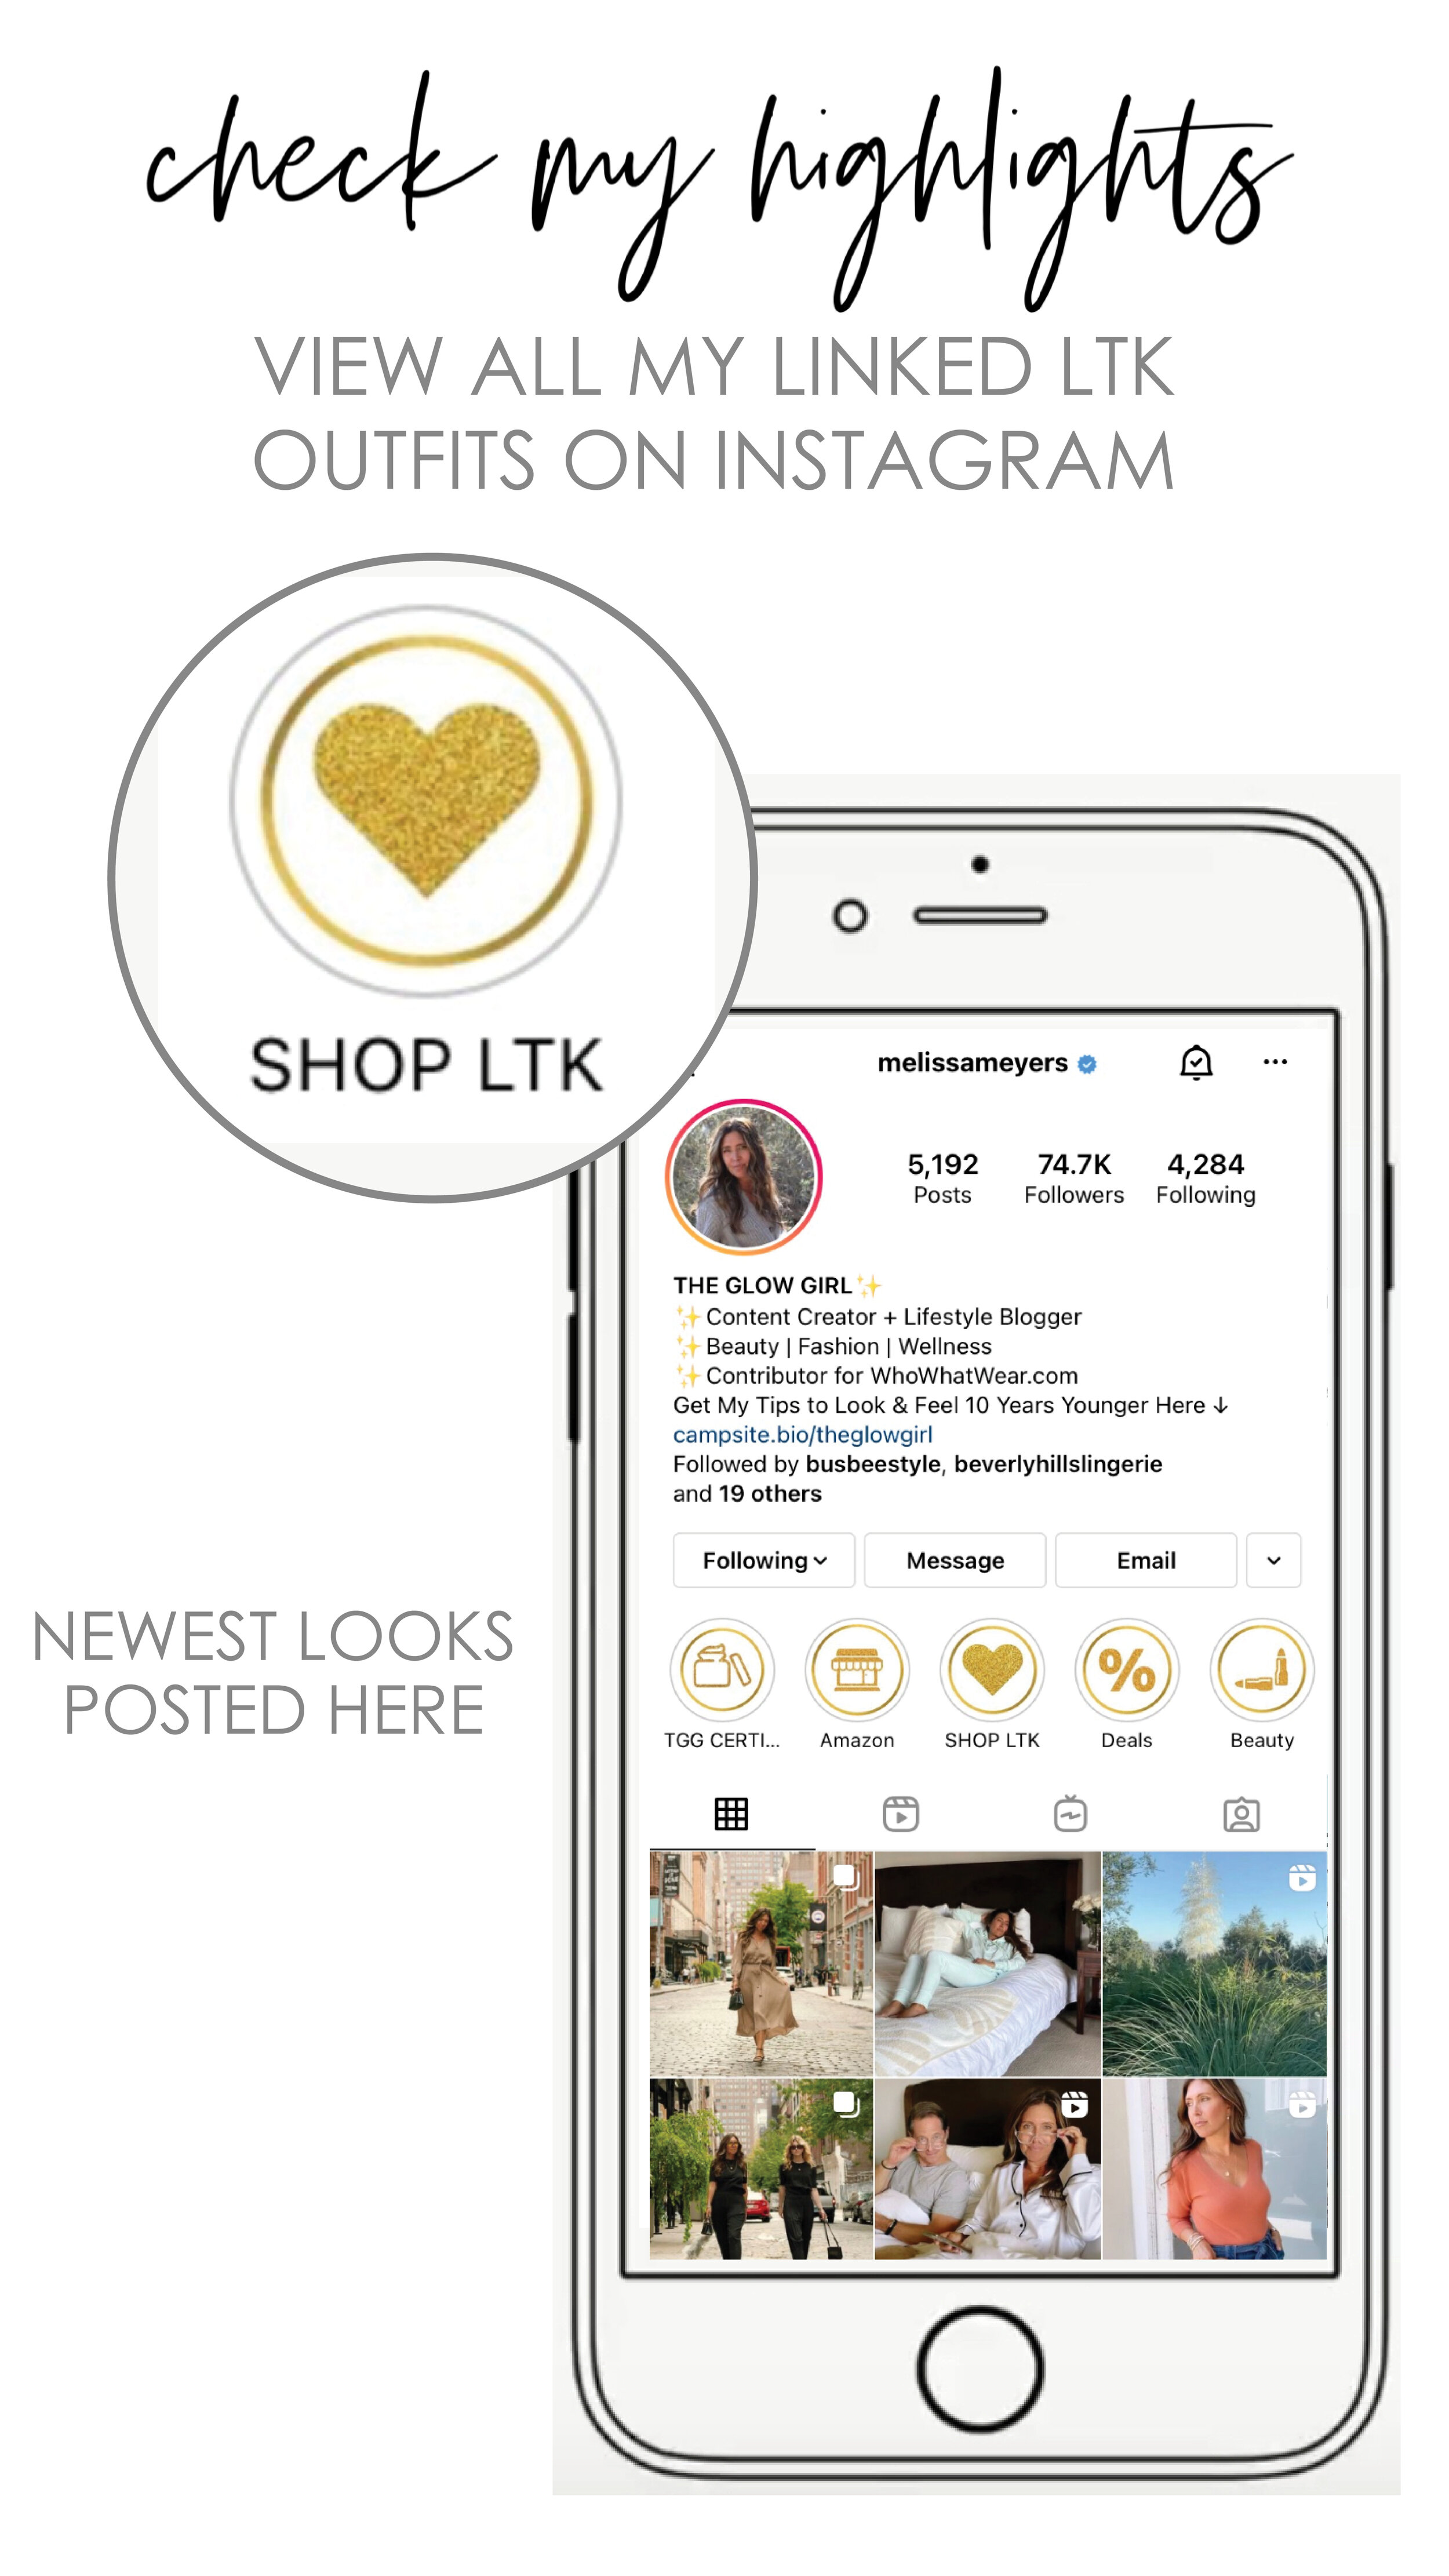 LTK (@shop.ltk) • Instagram photos and videos